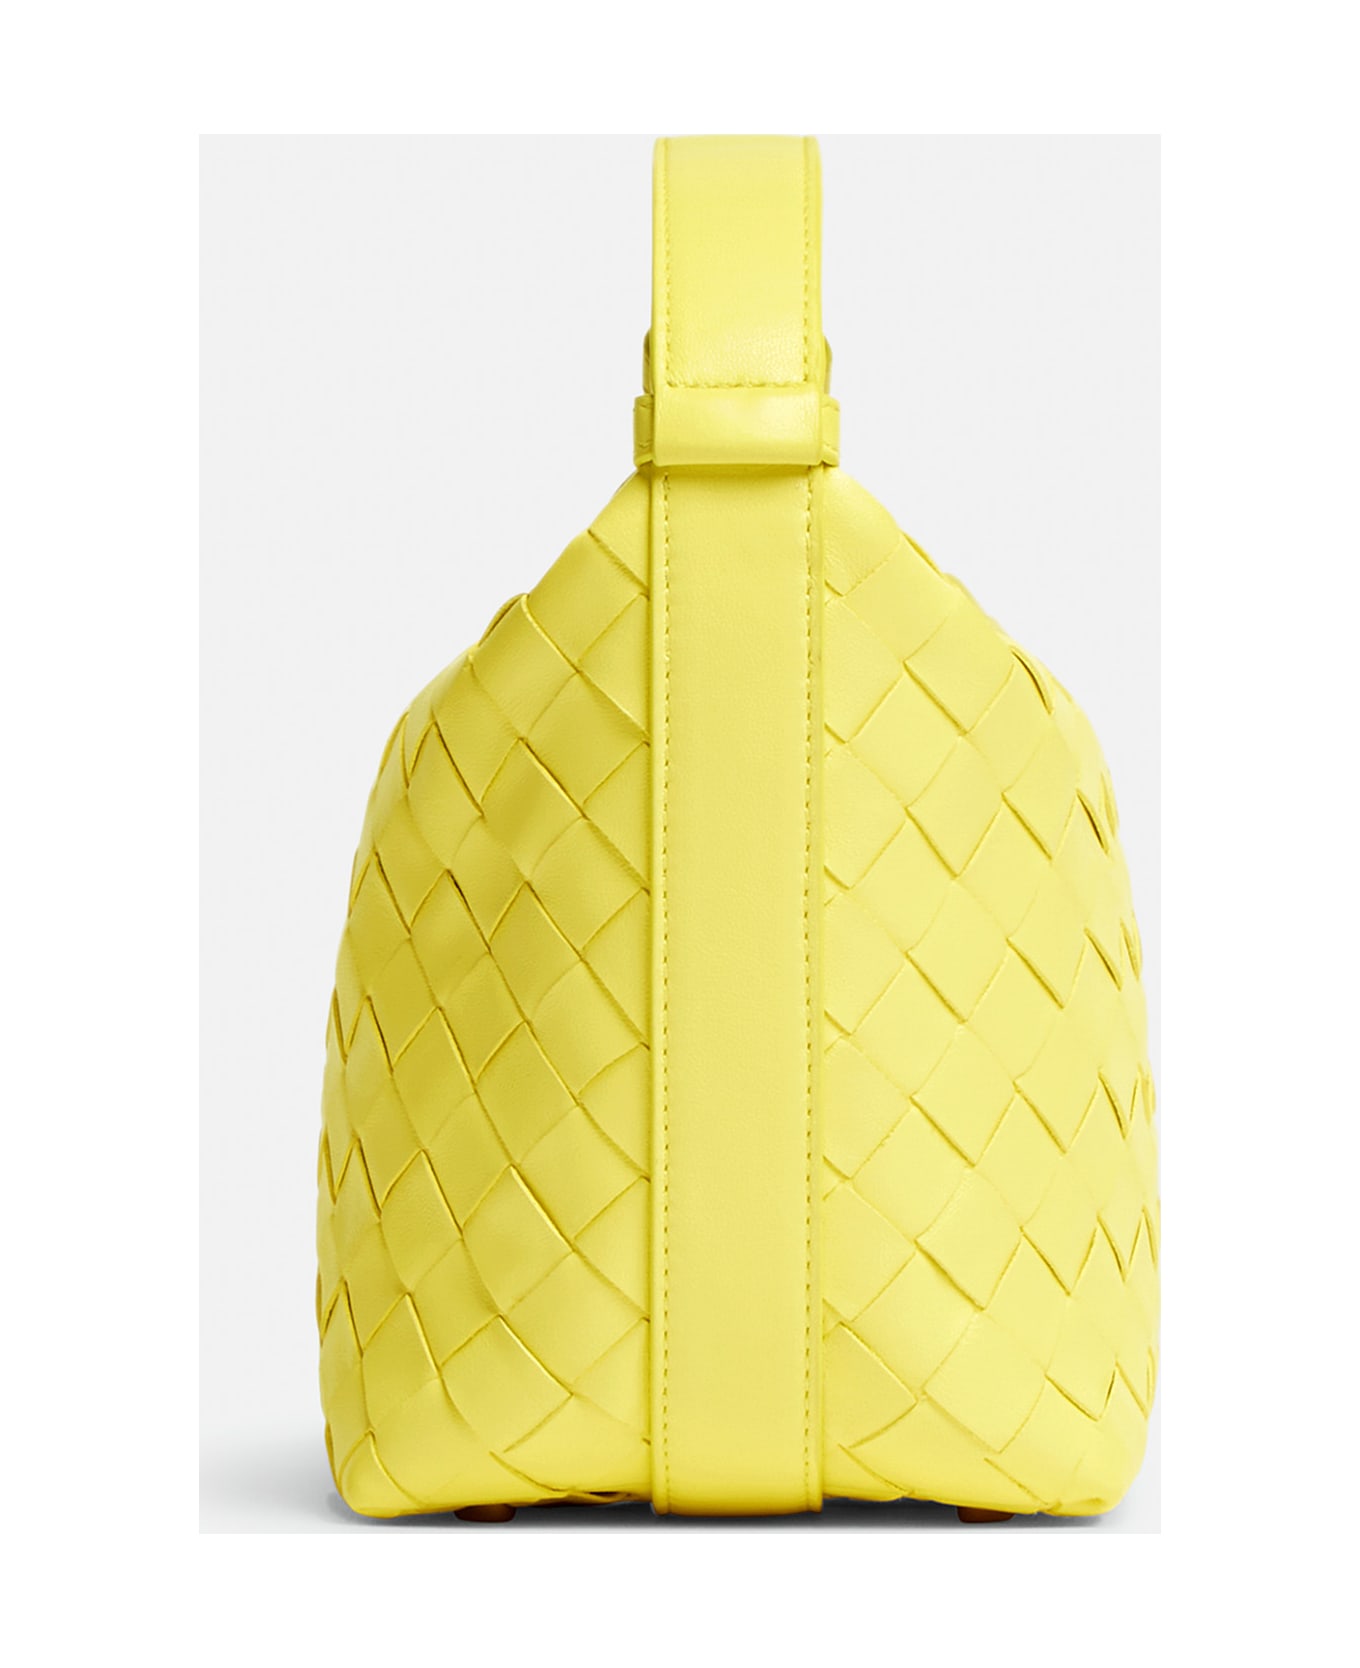 Bottega Veneta Candy Wallace Leather Handbag - Yellow トートバッグ